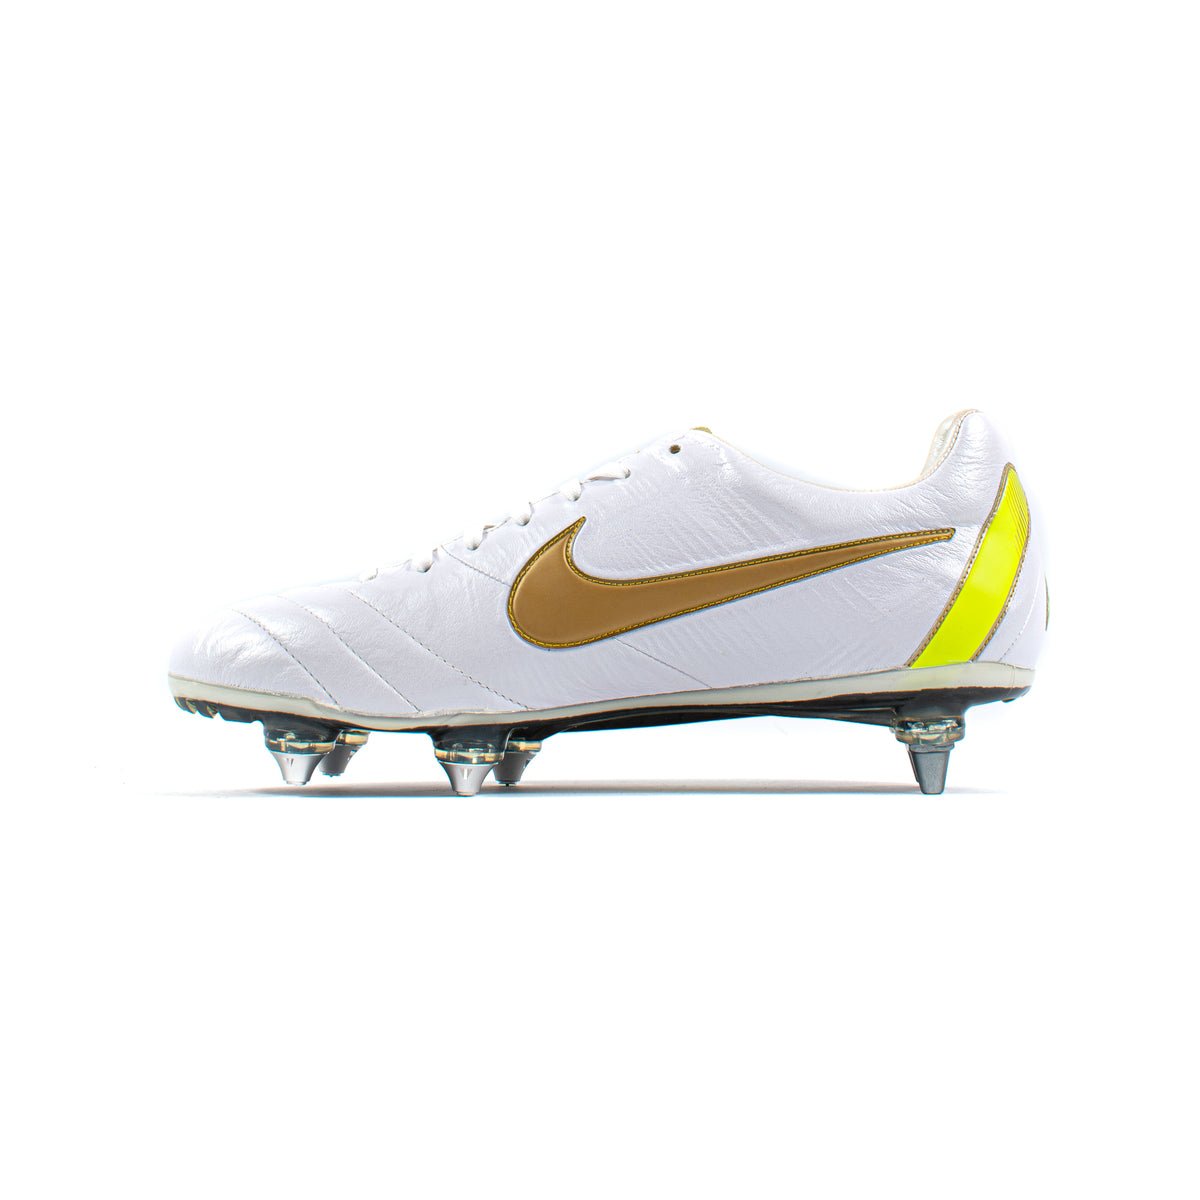 Nike Legend IV Elite White Gold SG – Soccer Cleats